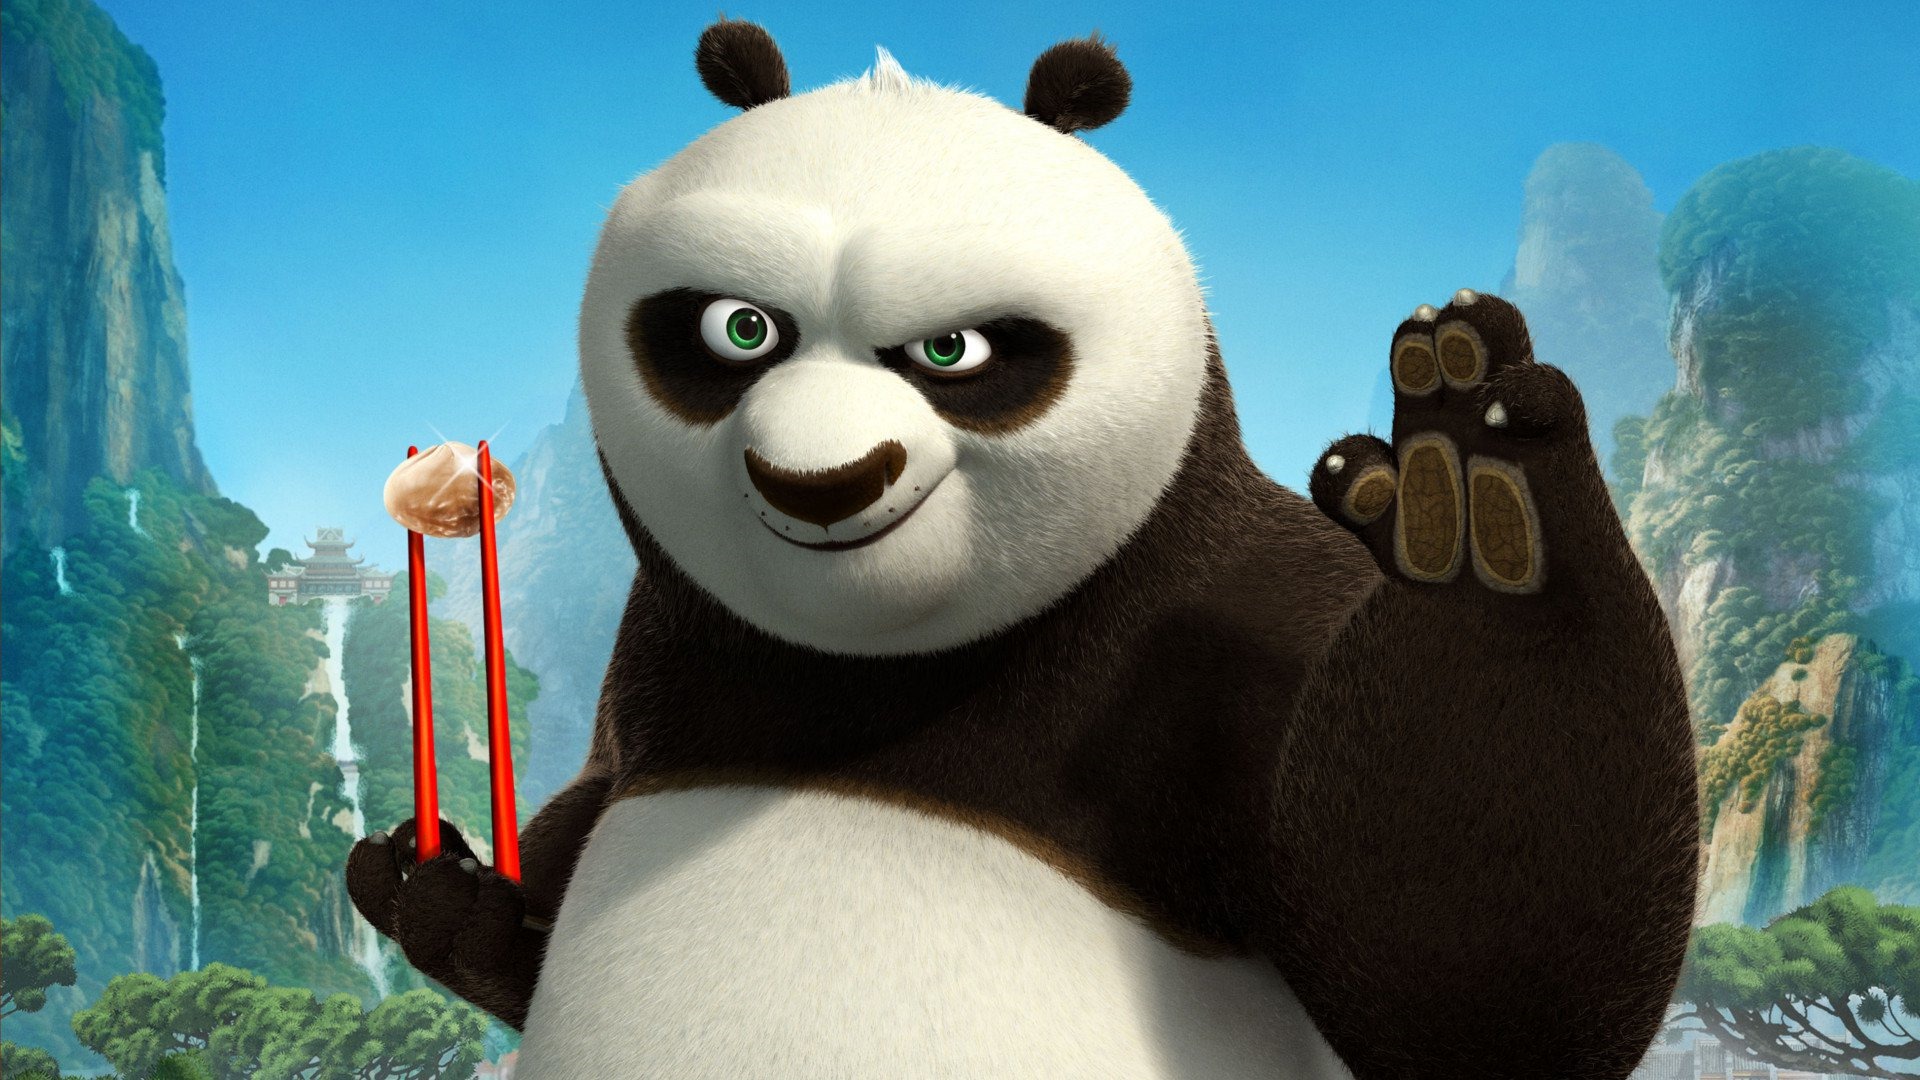 kung fu panda 3 watch hd movies 2k